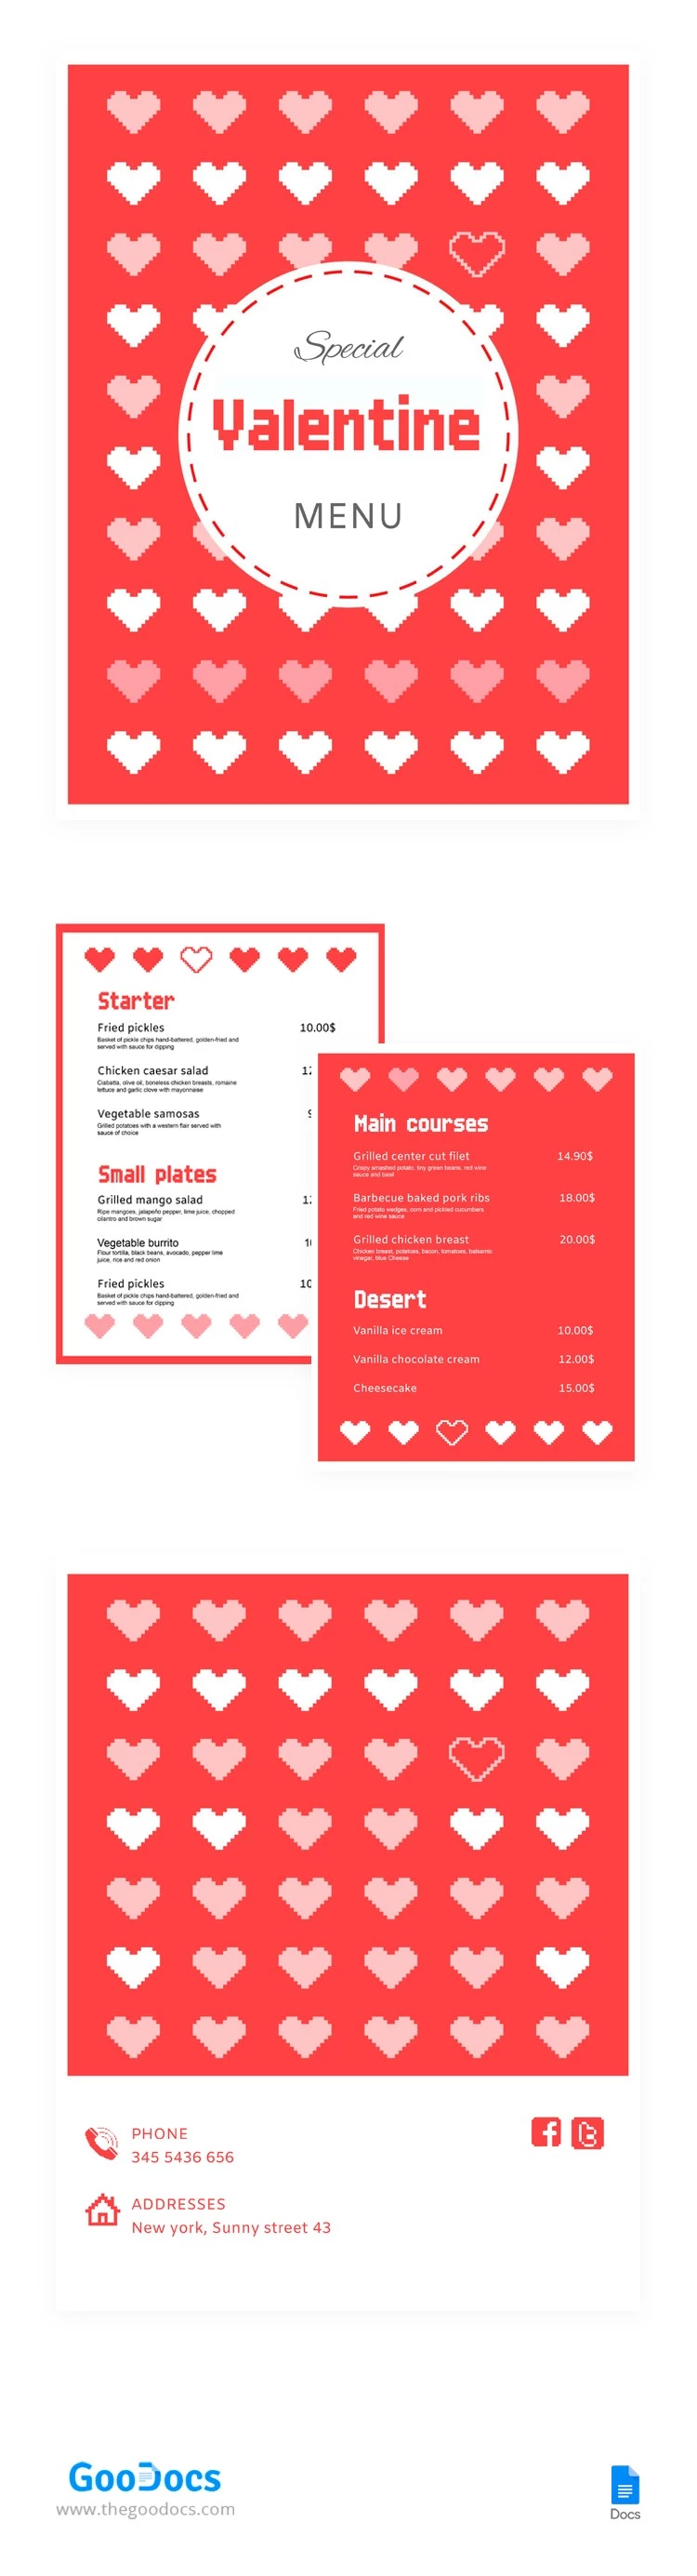 Menú de San Valentín Pixel - free Google Docs Template - 10062892